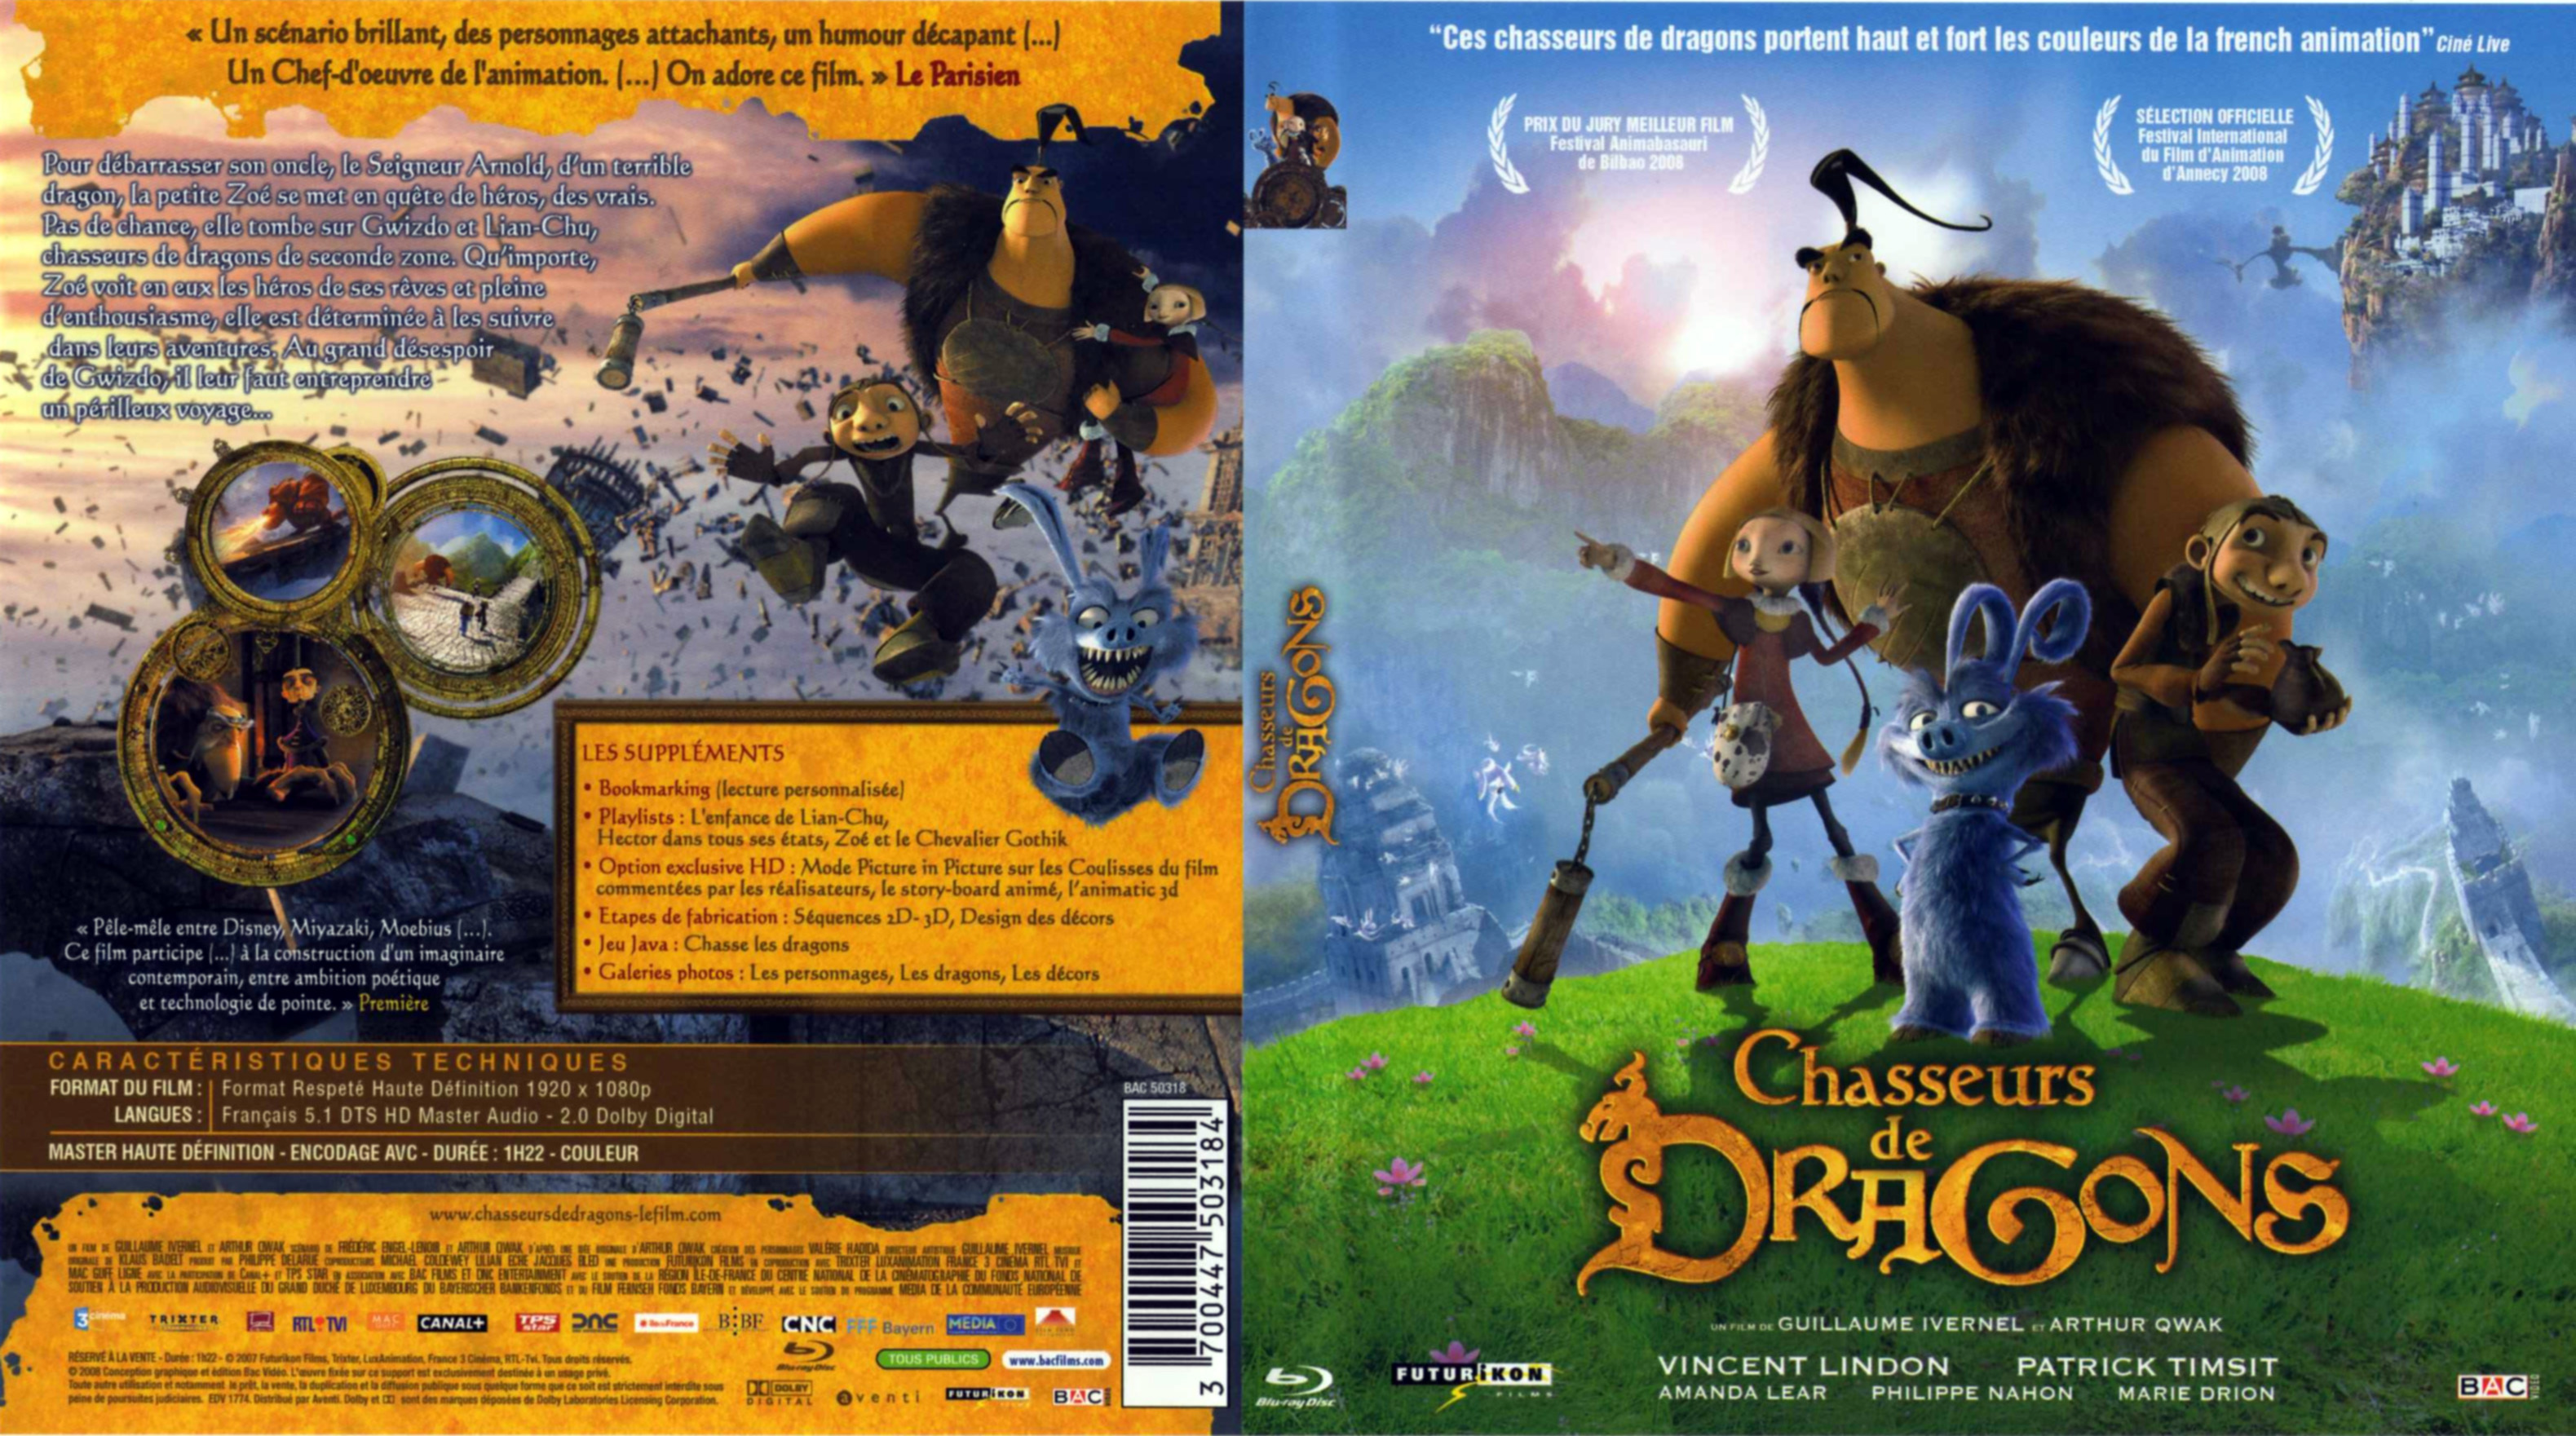 Jaquette DVD Chasseurs de dragons (BLU-RAY)